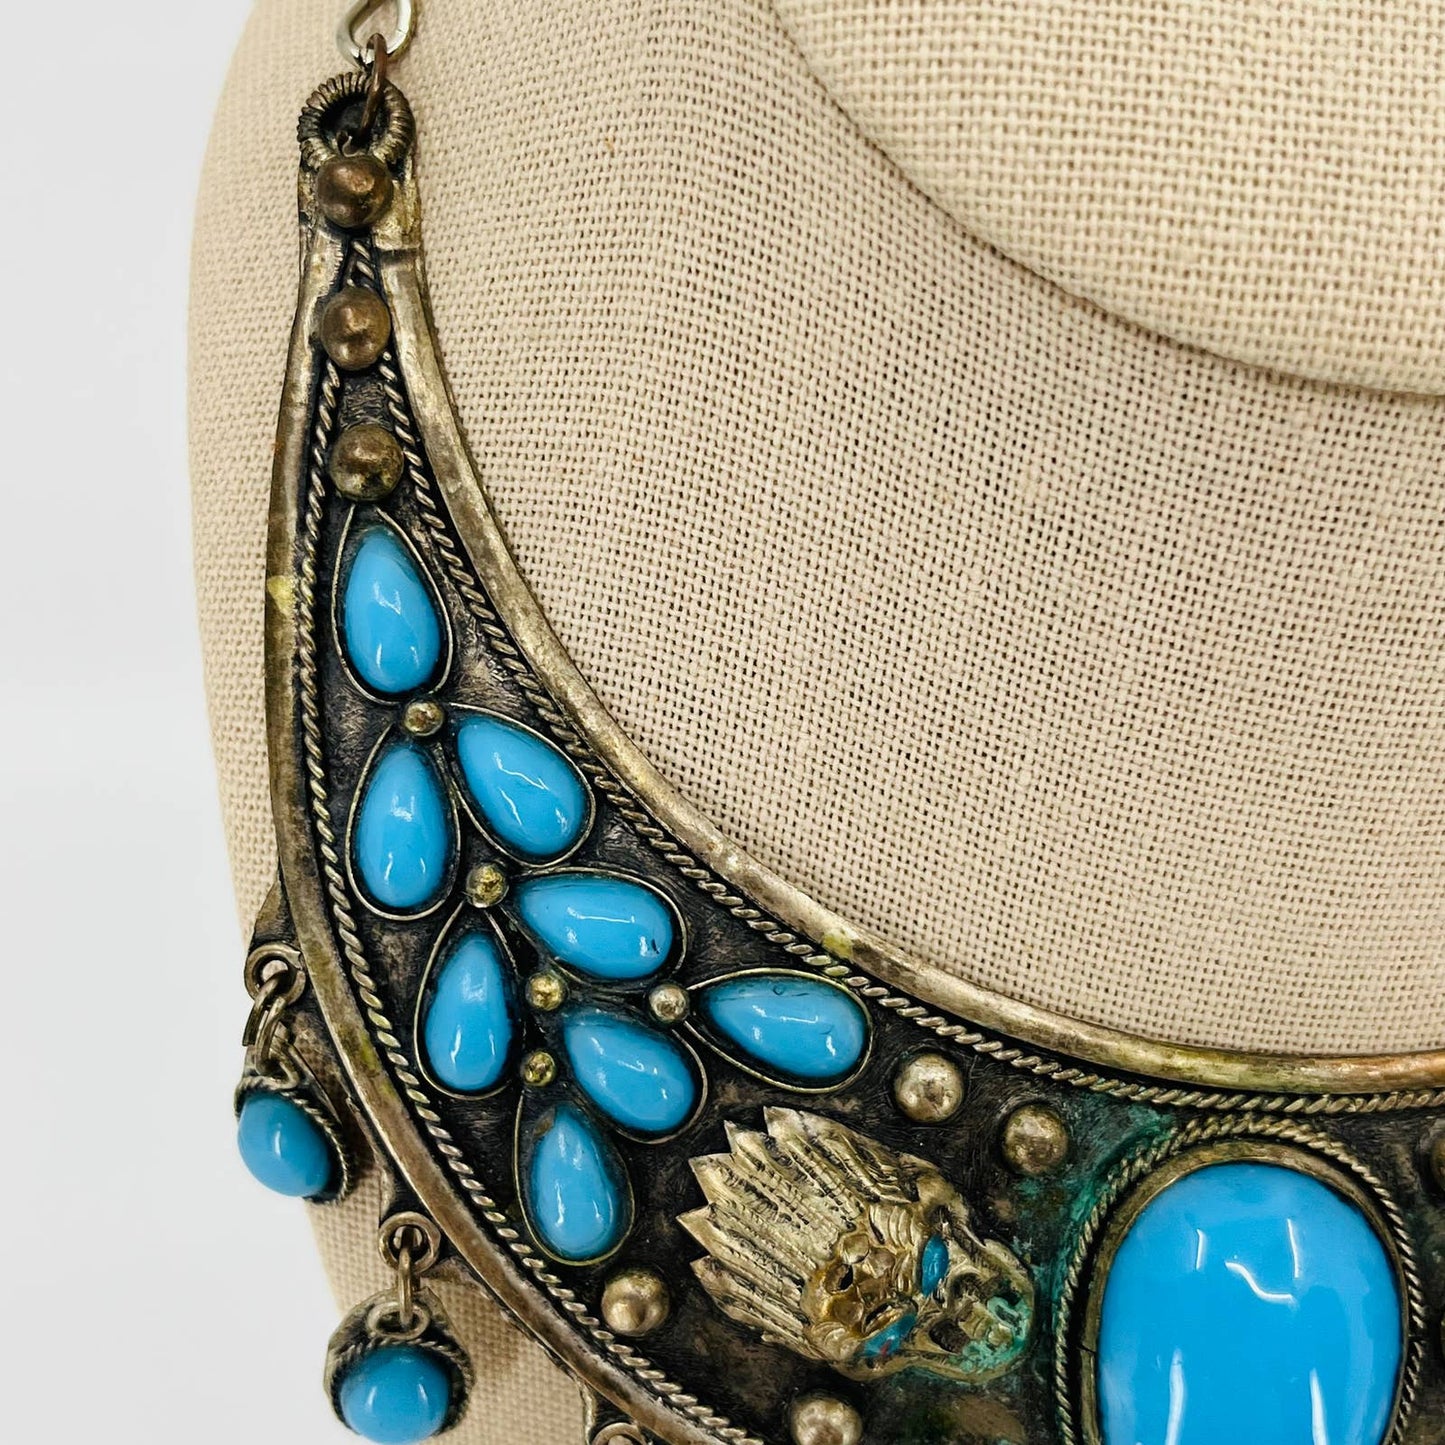 Boho Tribal Folk Art Silver & Turquoise Style Statement Bib Choker Necklace SB2